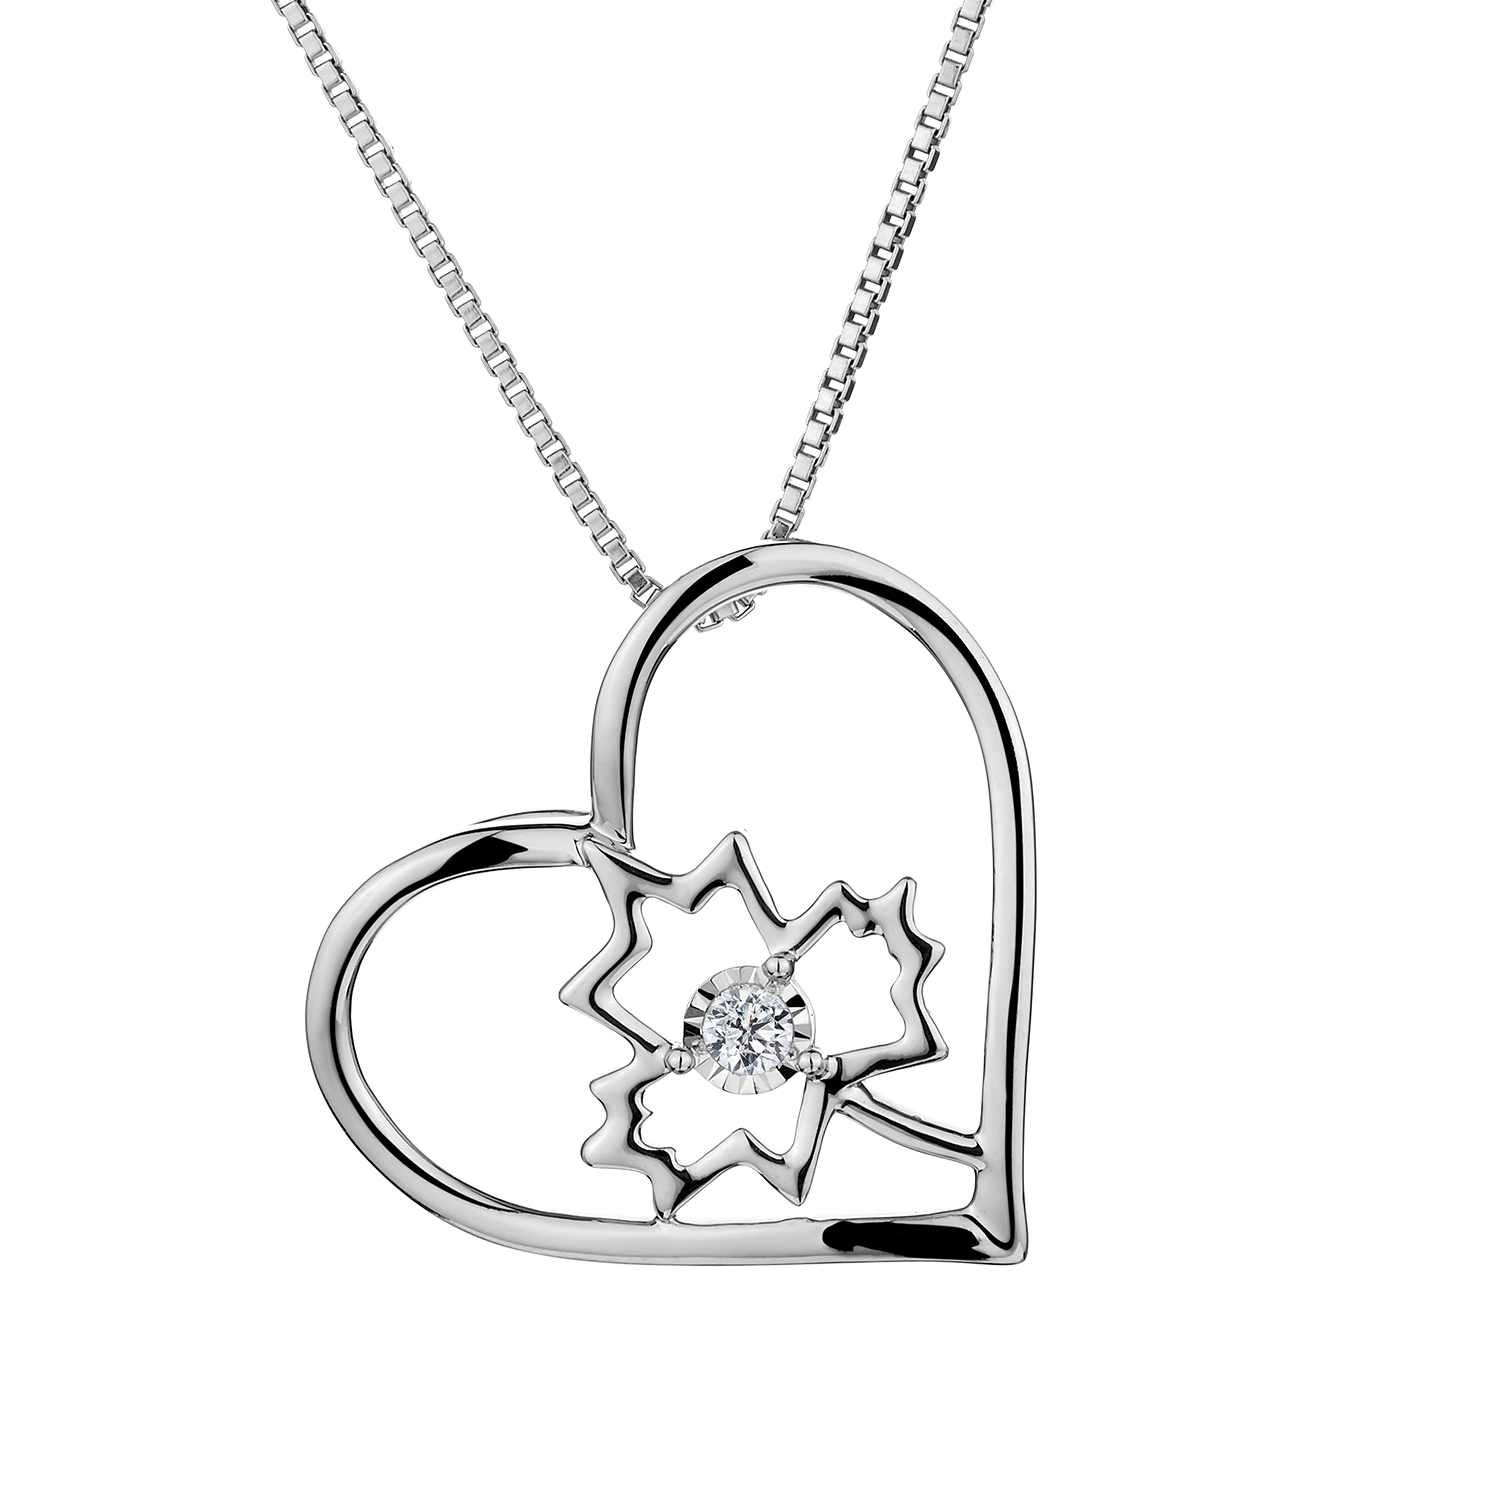 .03 Carat of Diamonds Heart Maple Leaf Pendant, Sterling Silver......................NOW